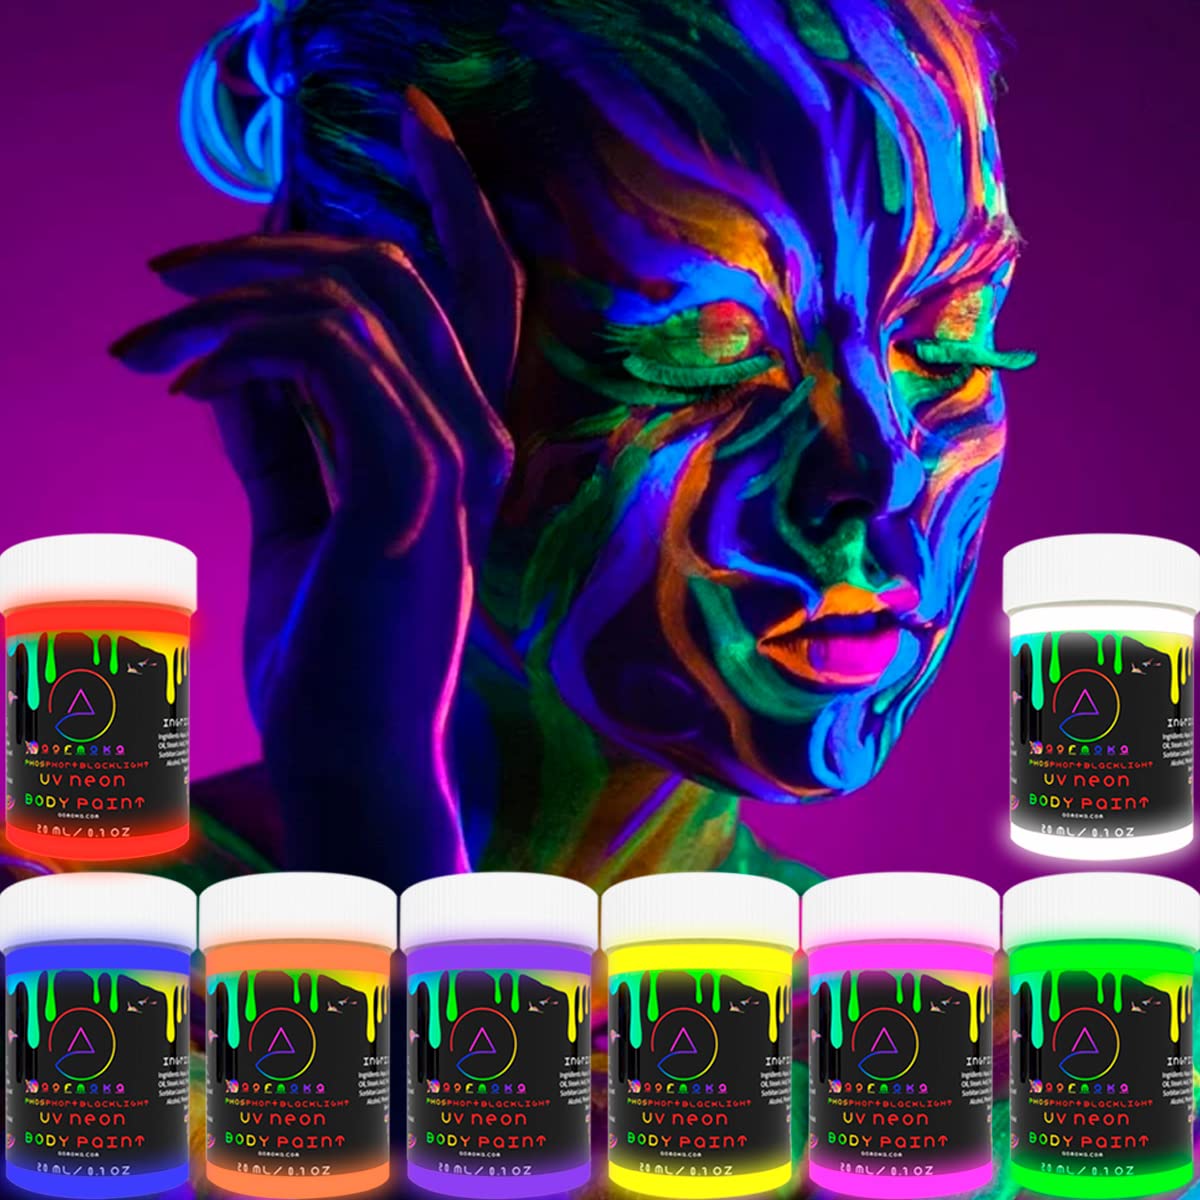 Neon Face Paint, Glow In The Dark Face Paint, 15ml Neon Body Paint Color,  Bonus Uv Flashlight, Blacklight Paint, Uv Reactive Neon Paint